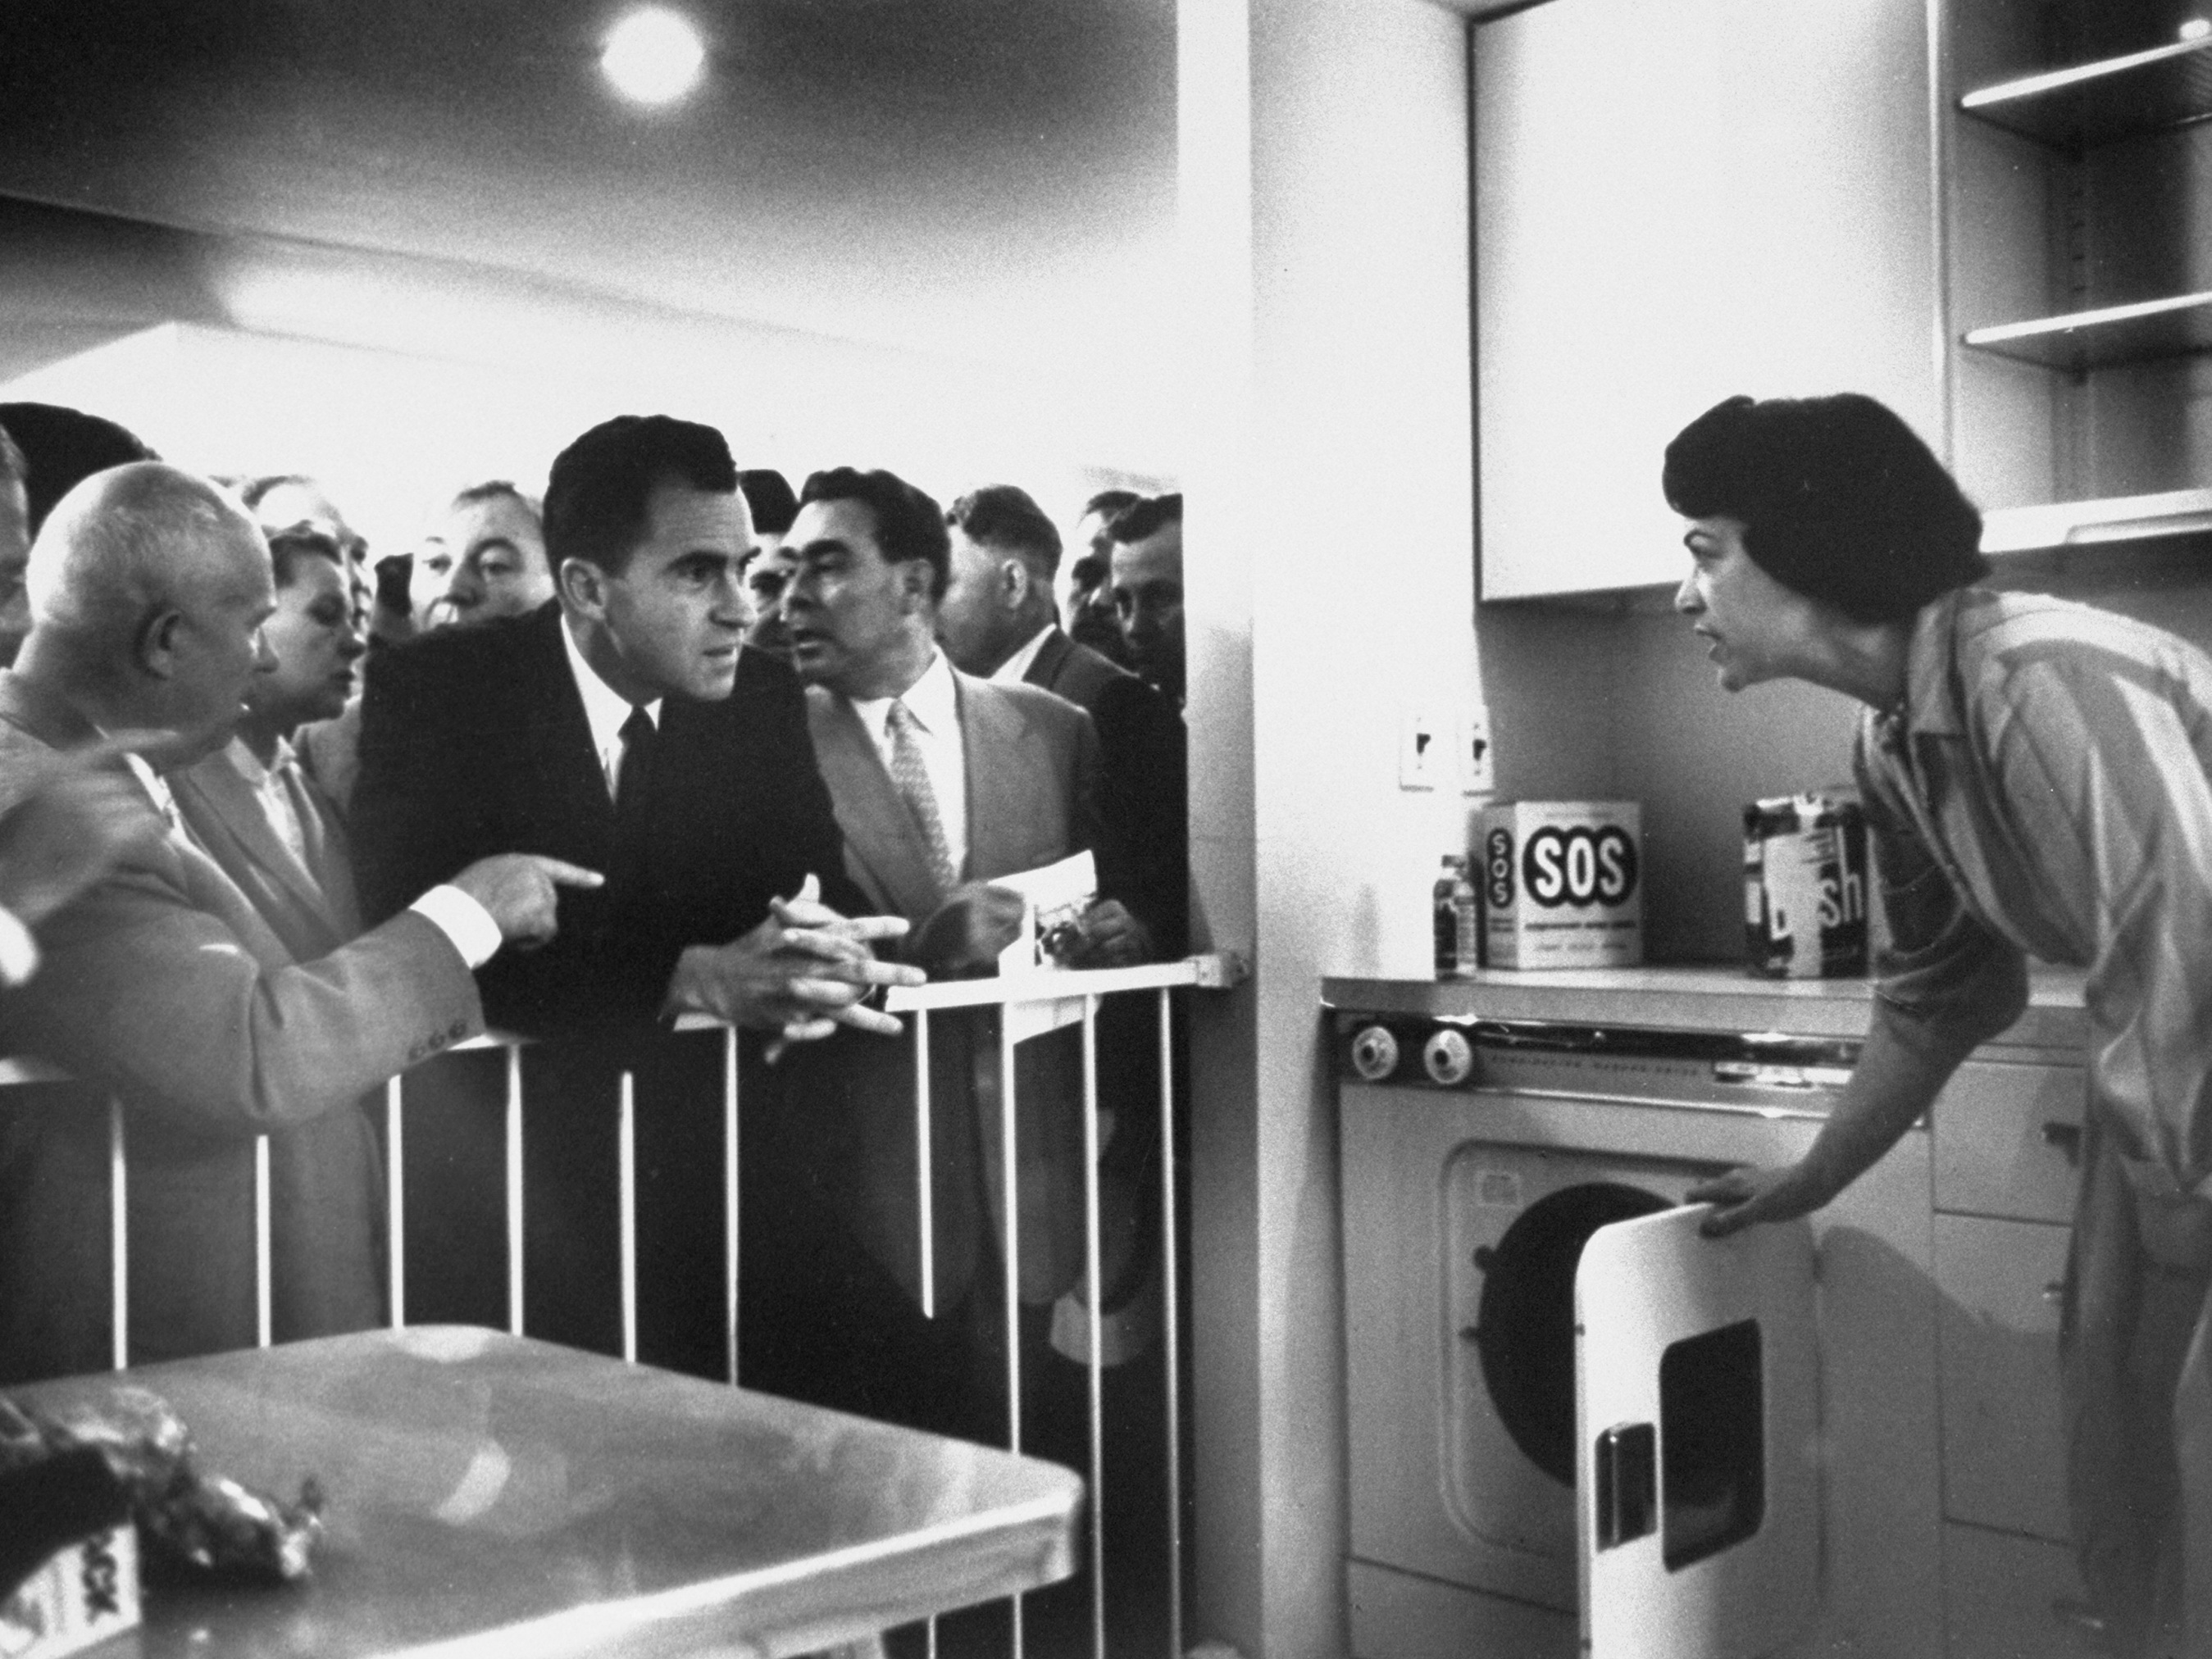 Soviet Premier Nikita Khrushchev and U.S. Vice President Richard Nixon have an impromptu and testy ideological debate in a model American kitchen in July 1959. Photo: Howard Sochurek/Time